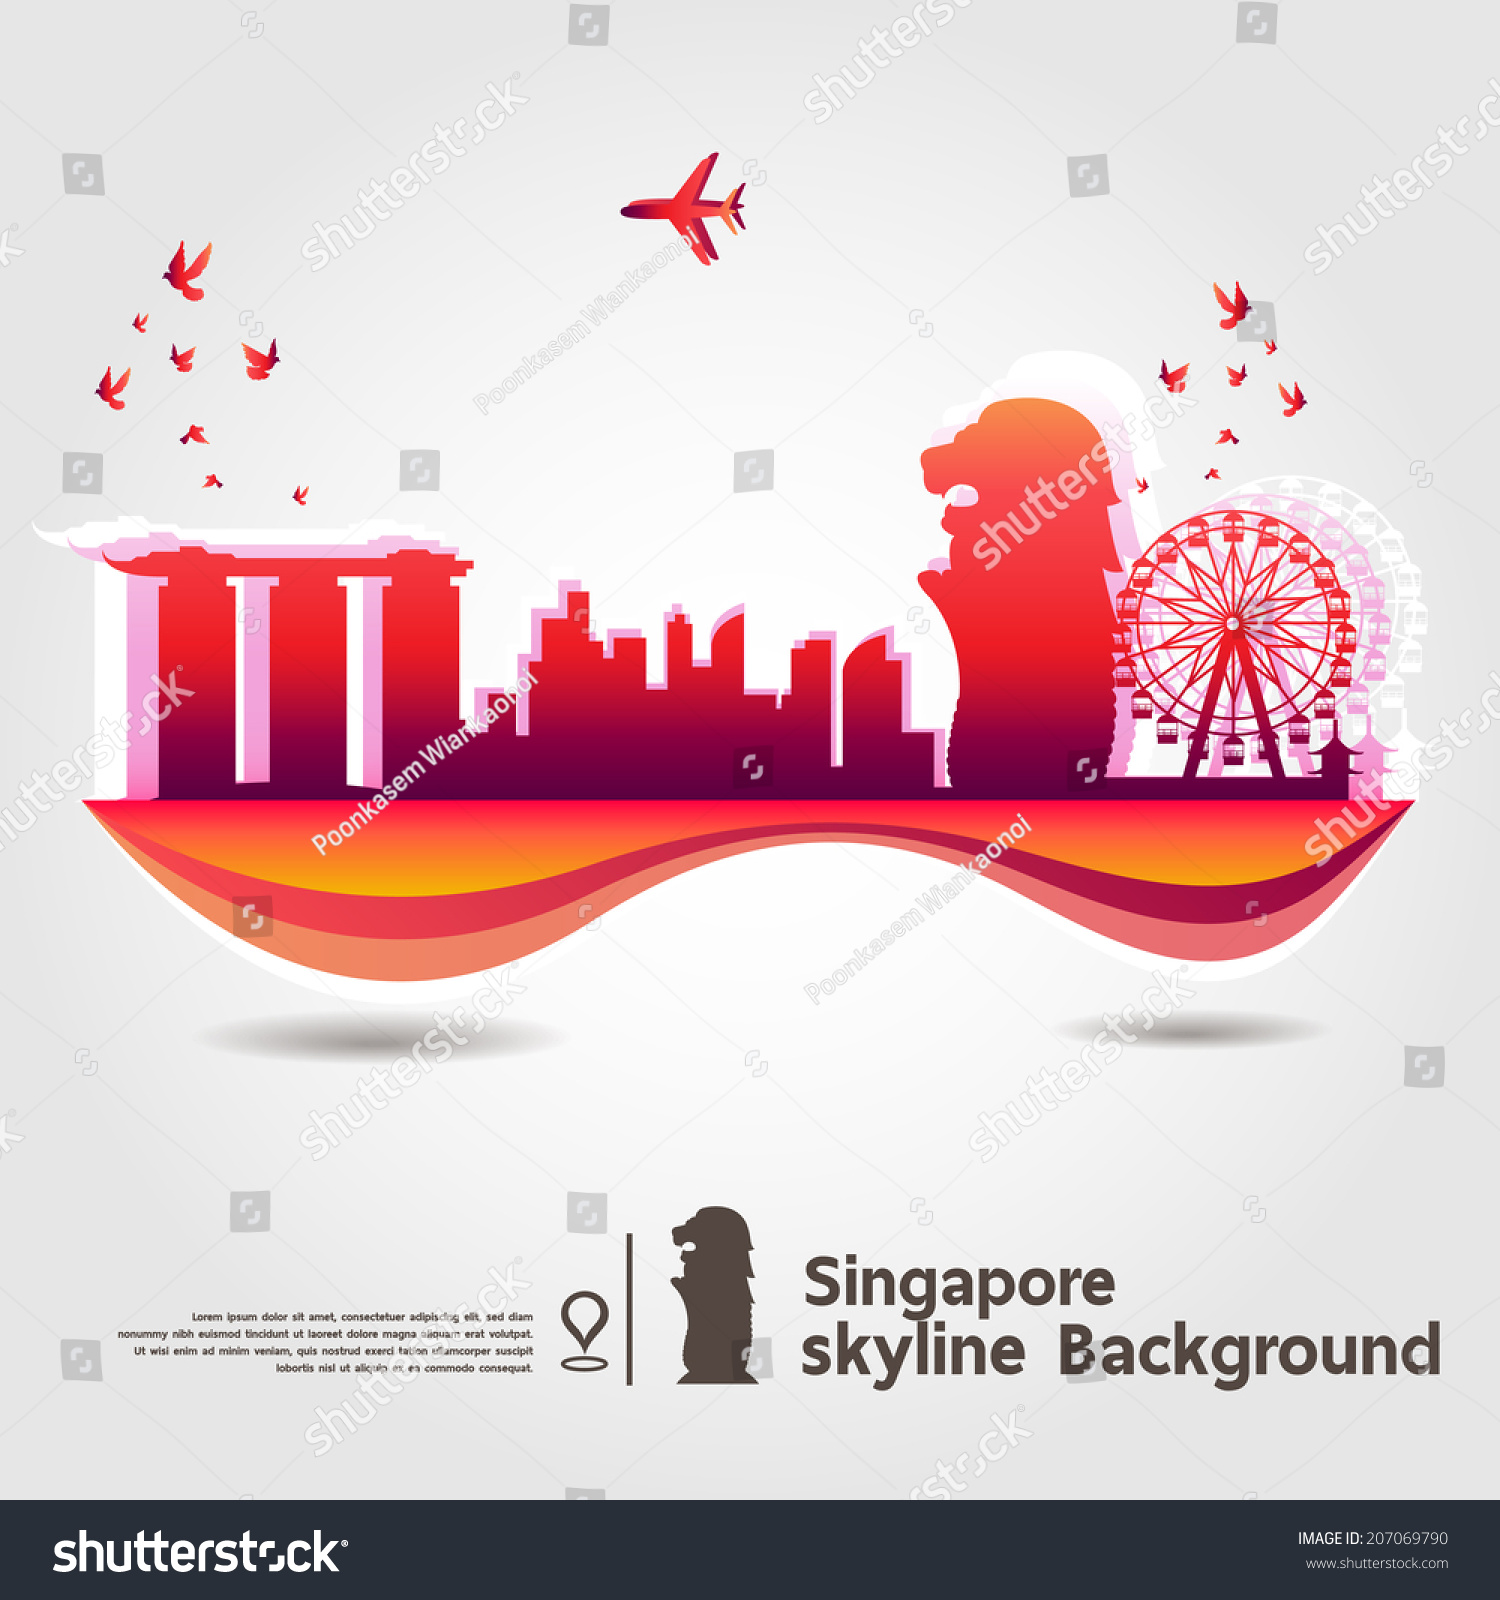 singapore flyer clipart - photo #33